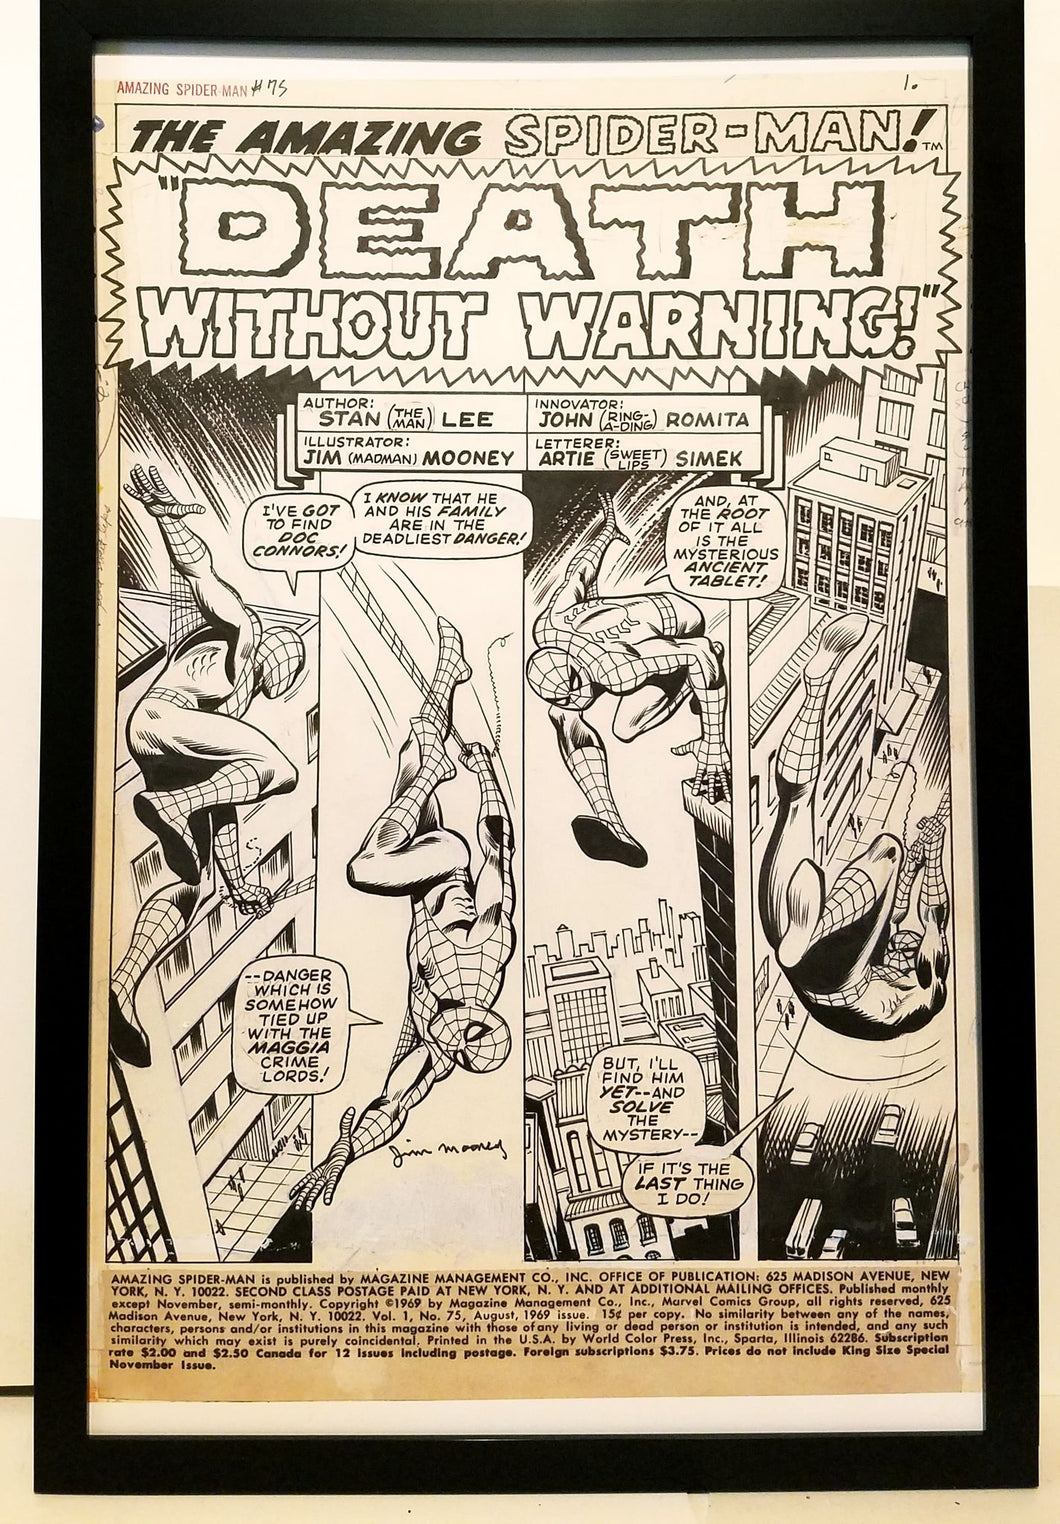 Amazing Spider-Man #75 pg. 1 John Romita 11x17 FRAMED Original Art Poster Marvel Comics